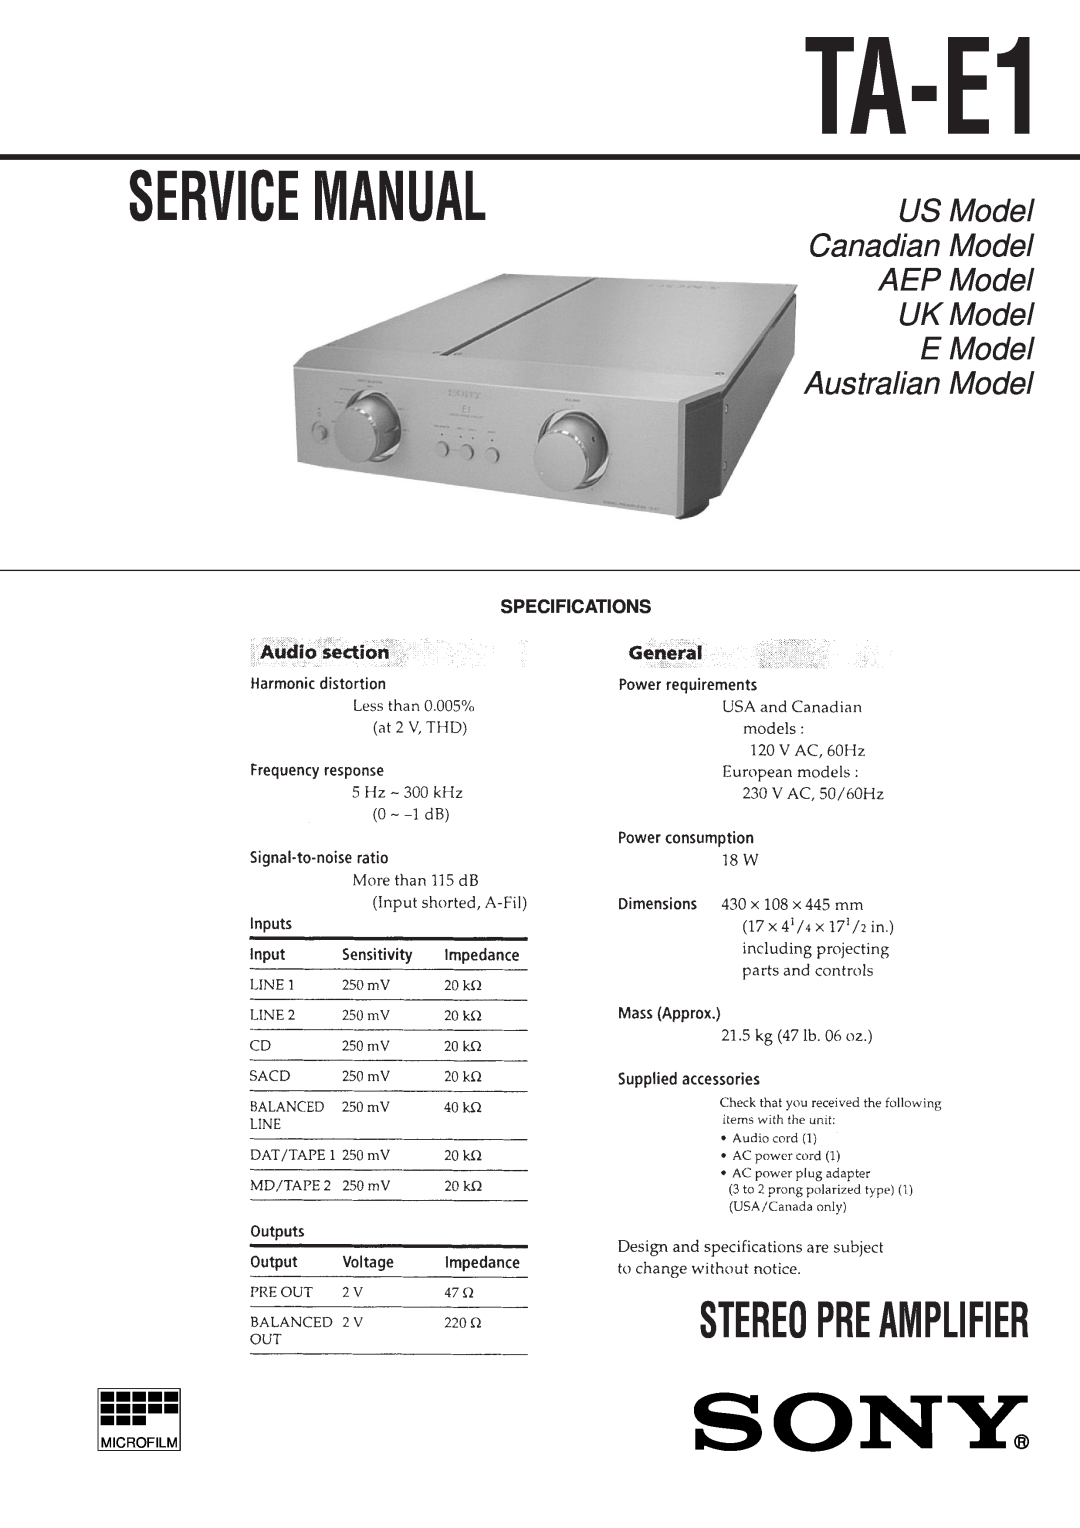 Sony TA-E1 manual Specifications, Service Manual, Stereo Pre Amplifier 